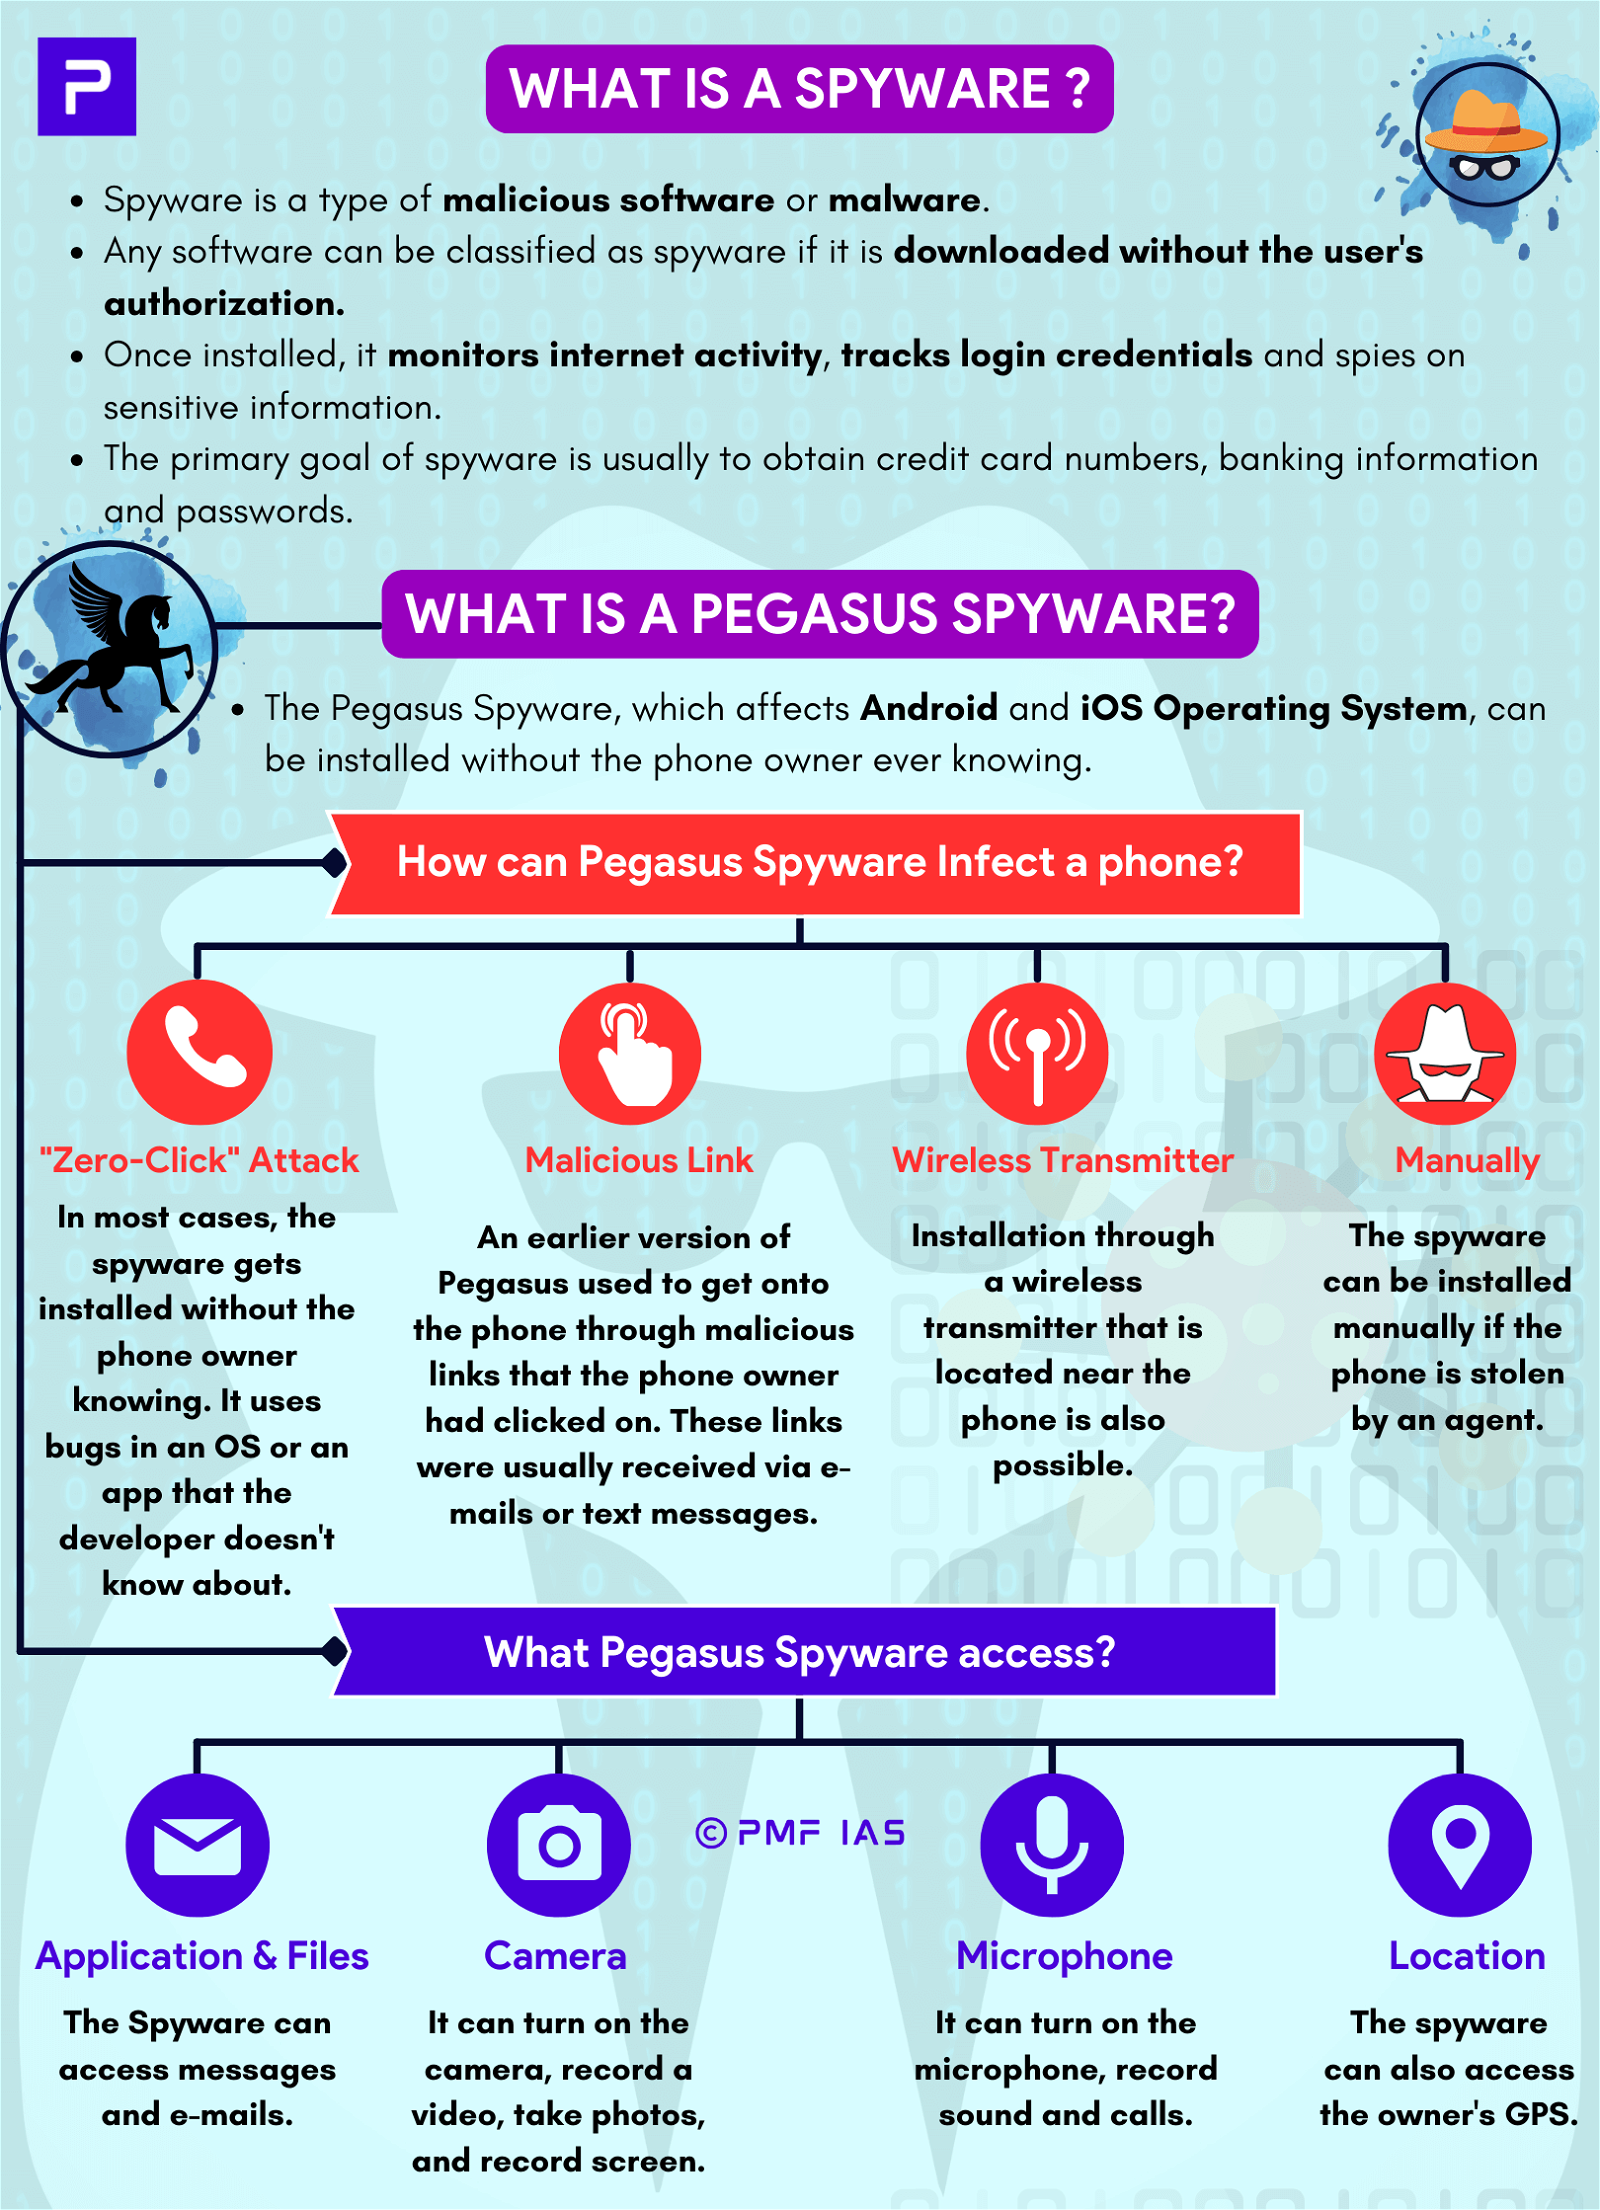 Spyware and Pegasus